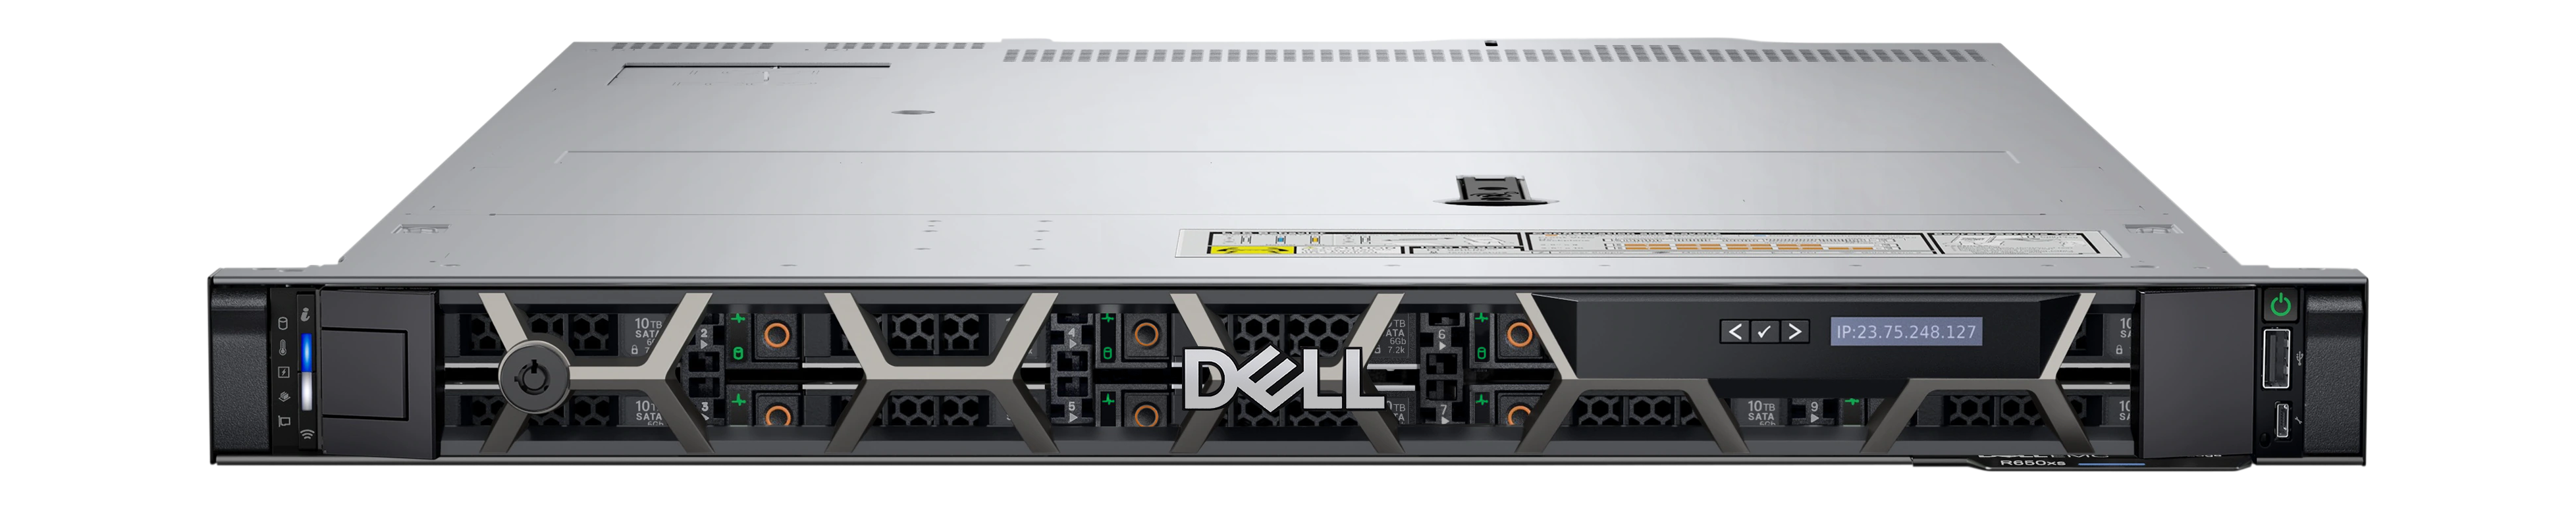 DellPowerEdge R650xs Smart Selection Flexi per650xs10a